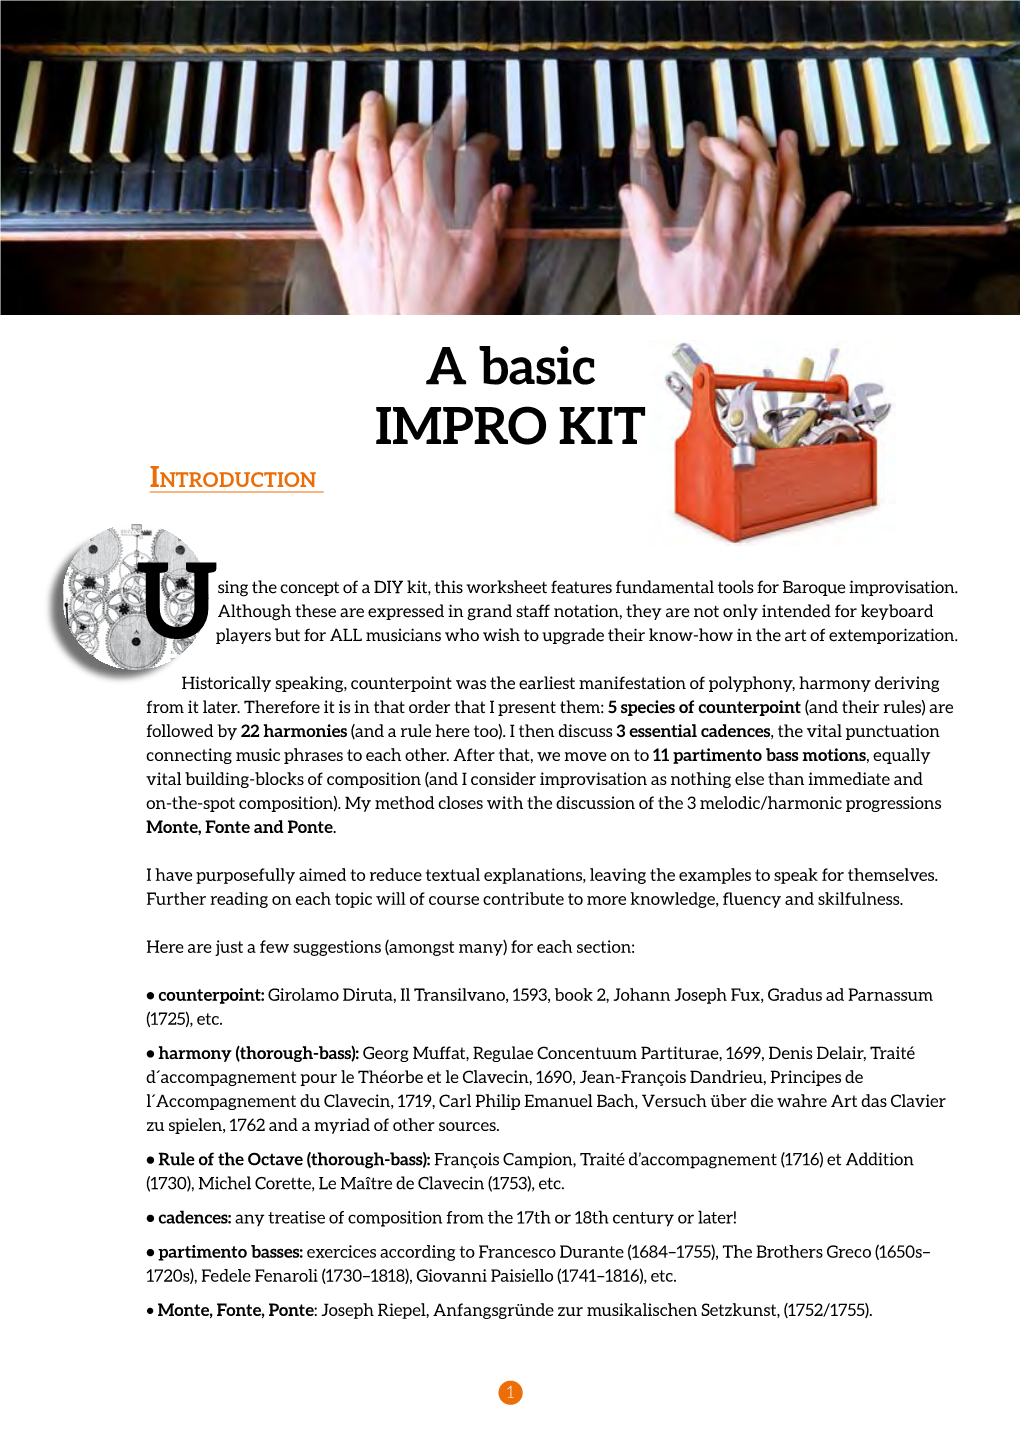 A Basic Impro Kit